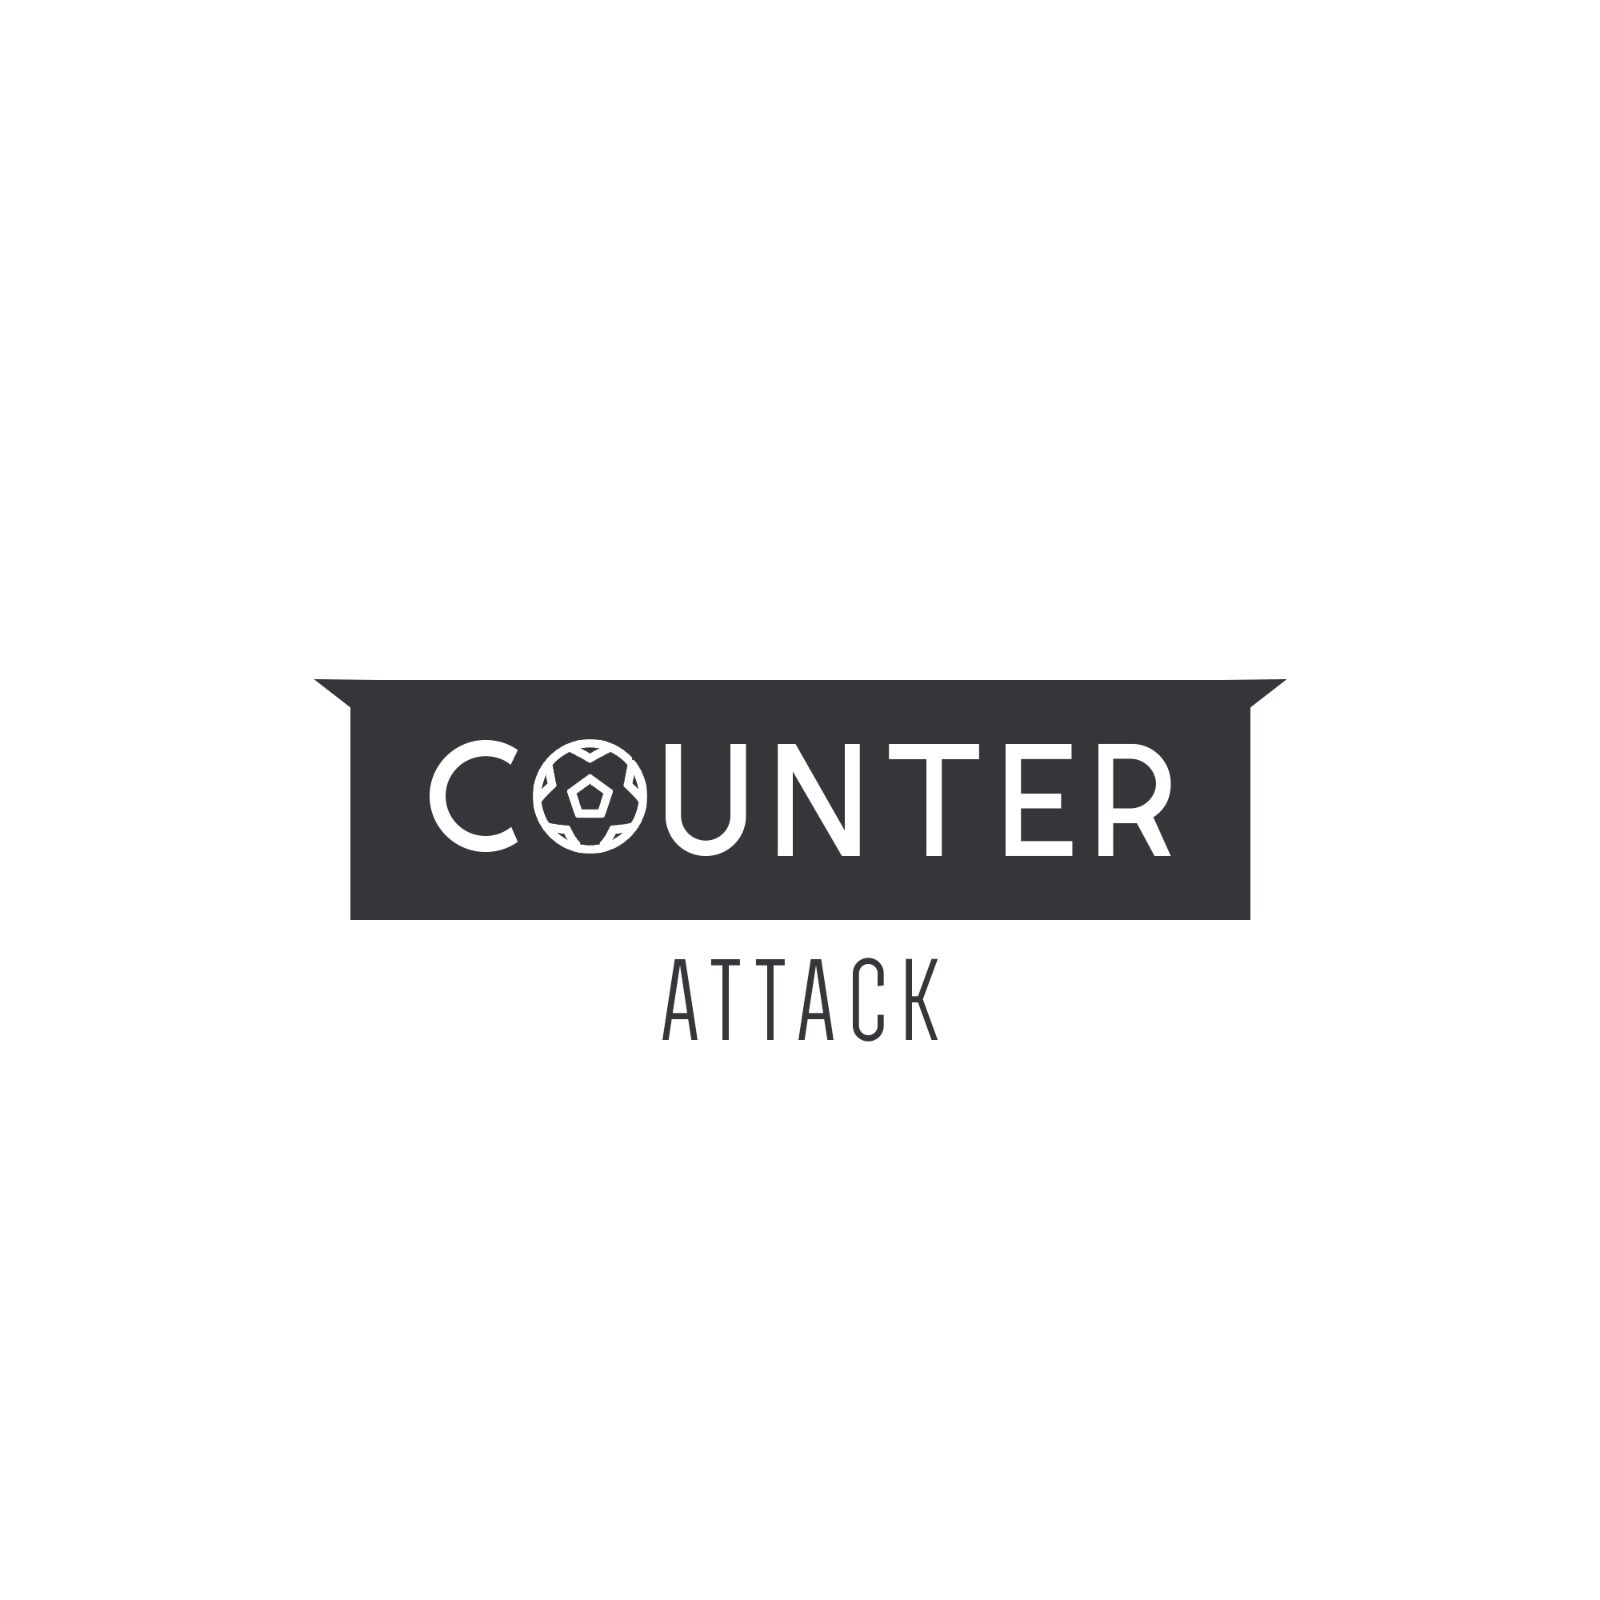 Counter Attack - Episode 111 - Will Seymore On Sligo Rovers, Irish Premier League and MLS Quality Increasing